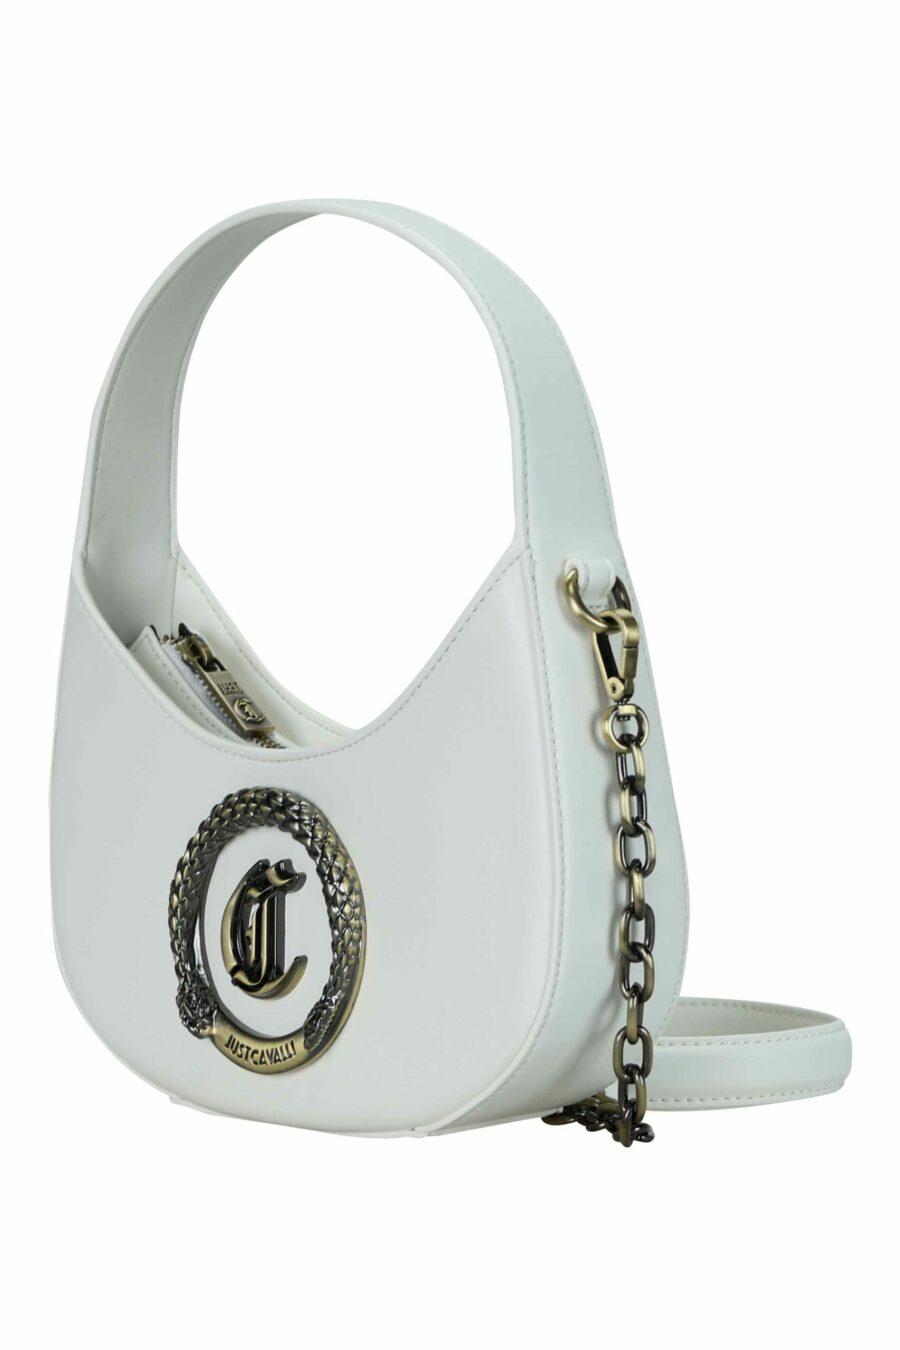 White shoulder bag with golden circular "c" logo - 8052672643797 1 scaled